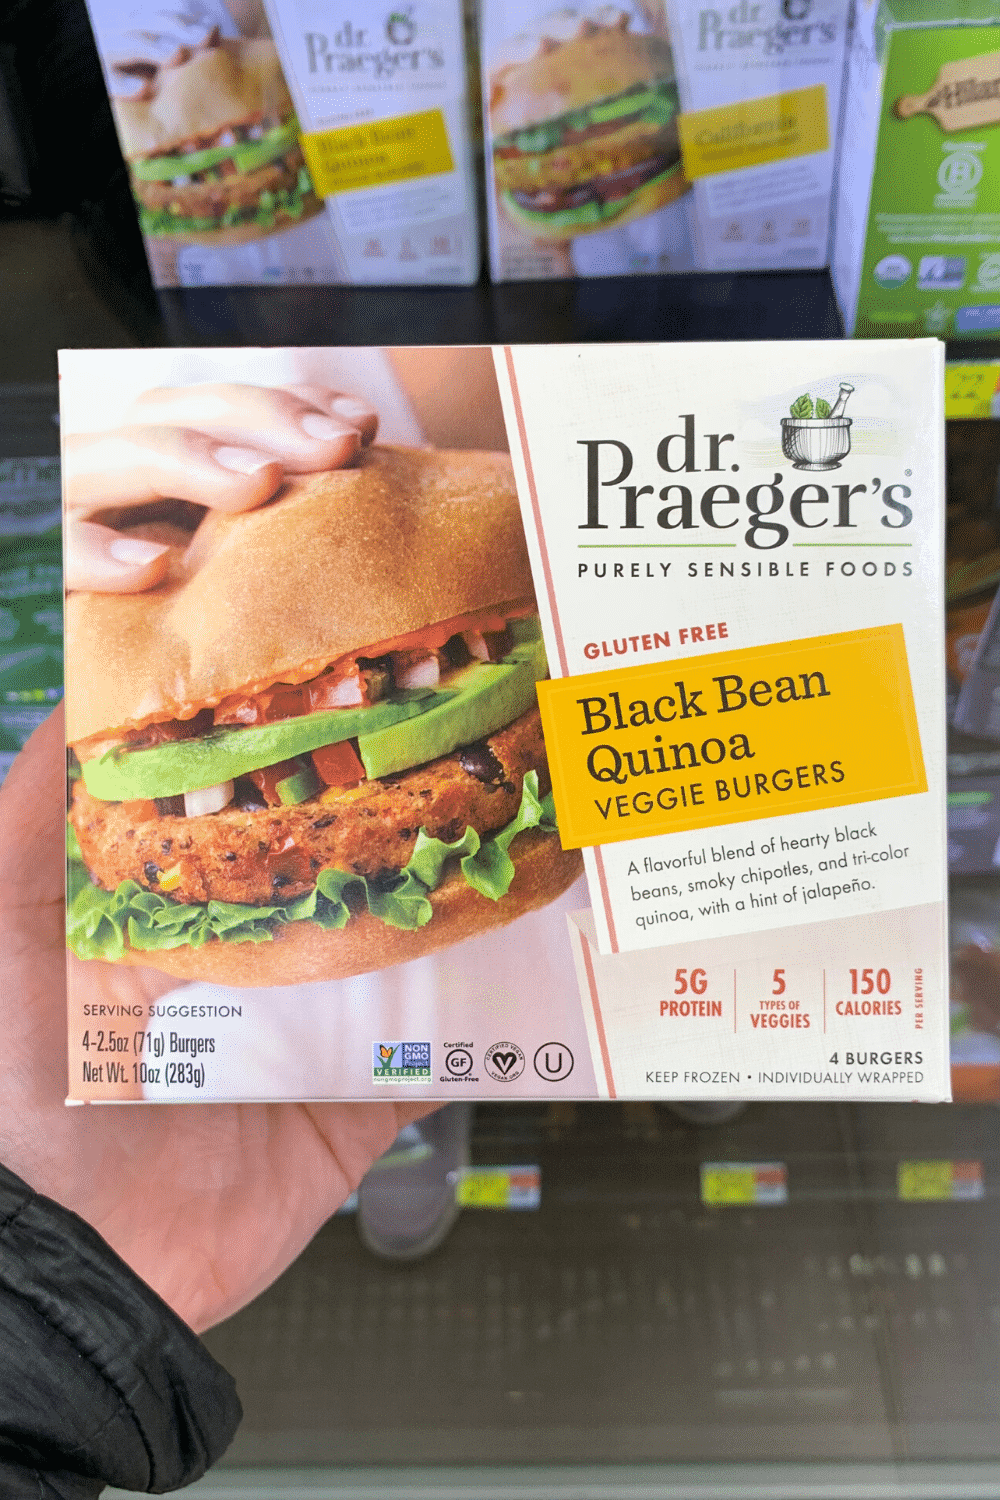 A hand holding Dr. Prager's black bean quinoa veggie burgers.